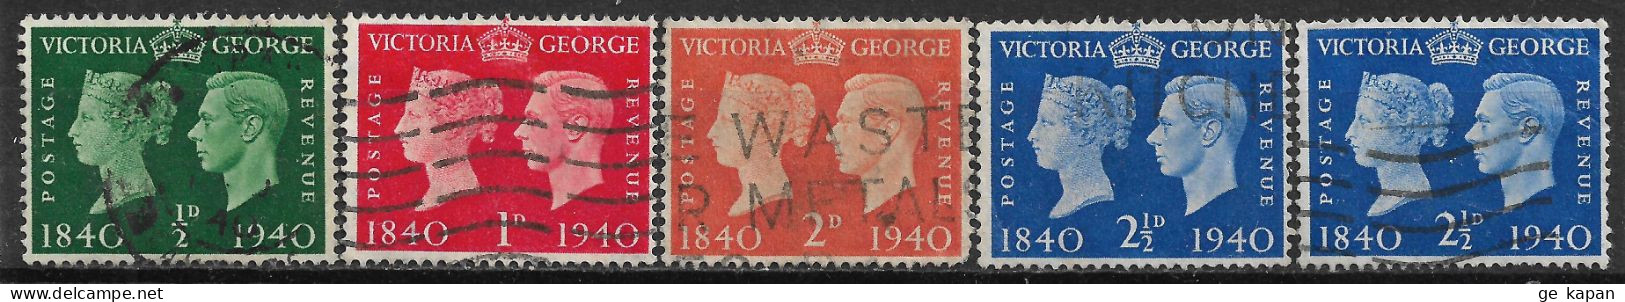 1940 GREAT BRITAIN Set Of 5 Used Stamps (Scott # 252,253,255,256) CV $2.60 - Usati